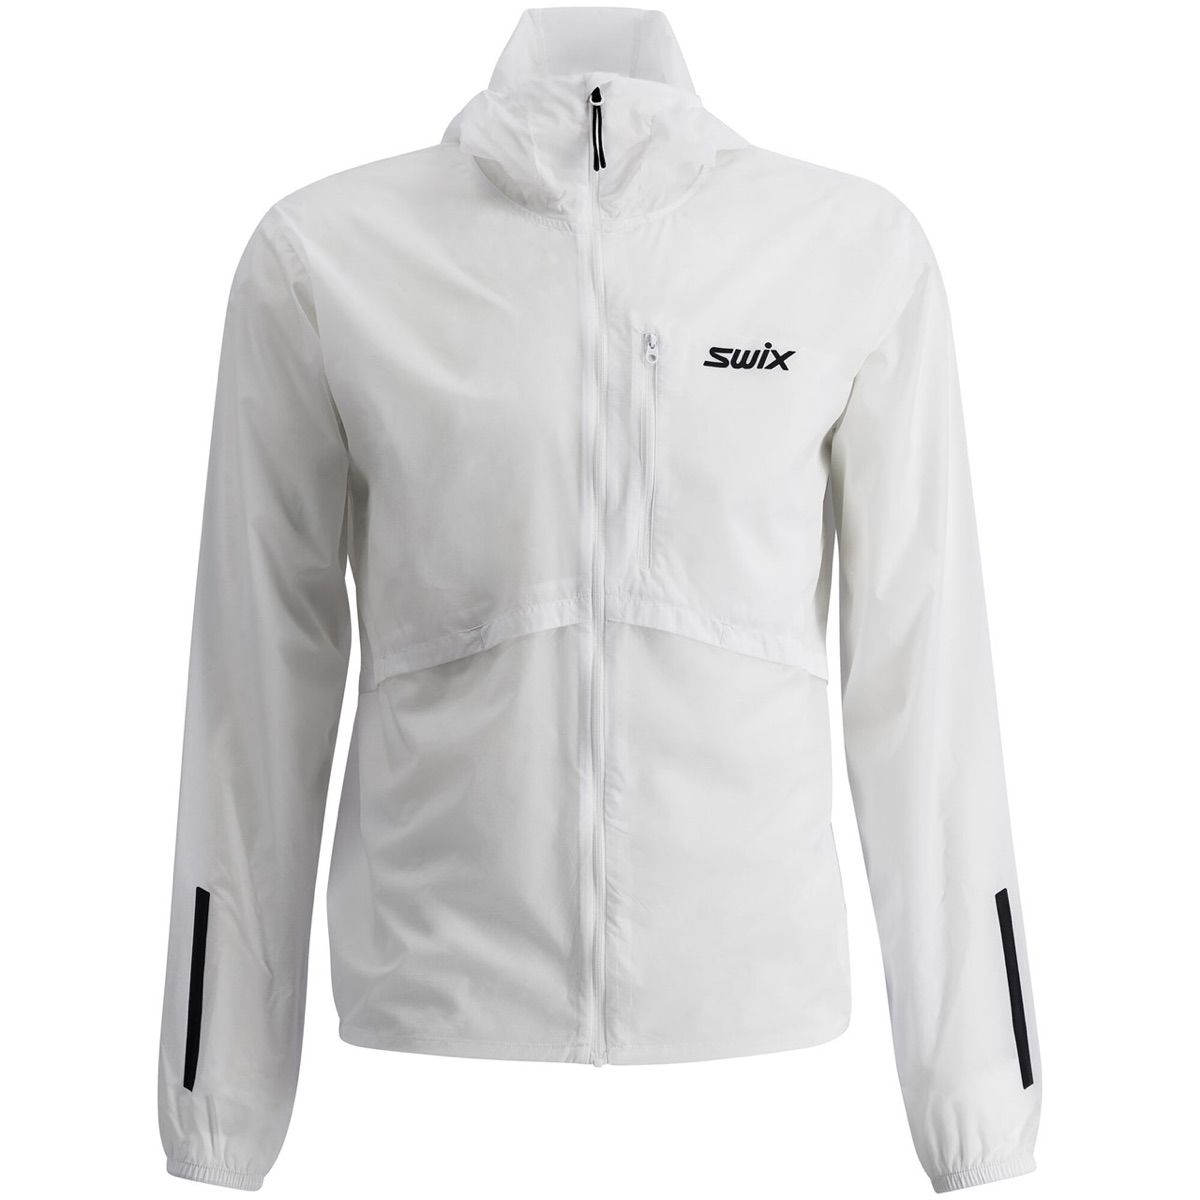 Swix Men's Pace Wind Light Hooded Jacket Bright white